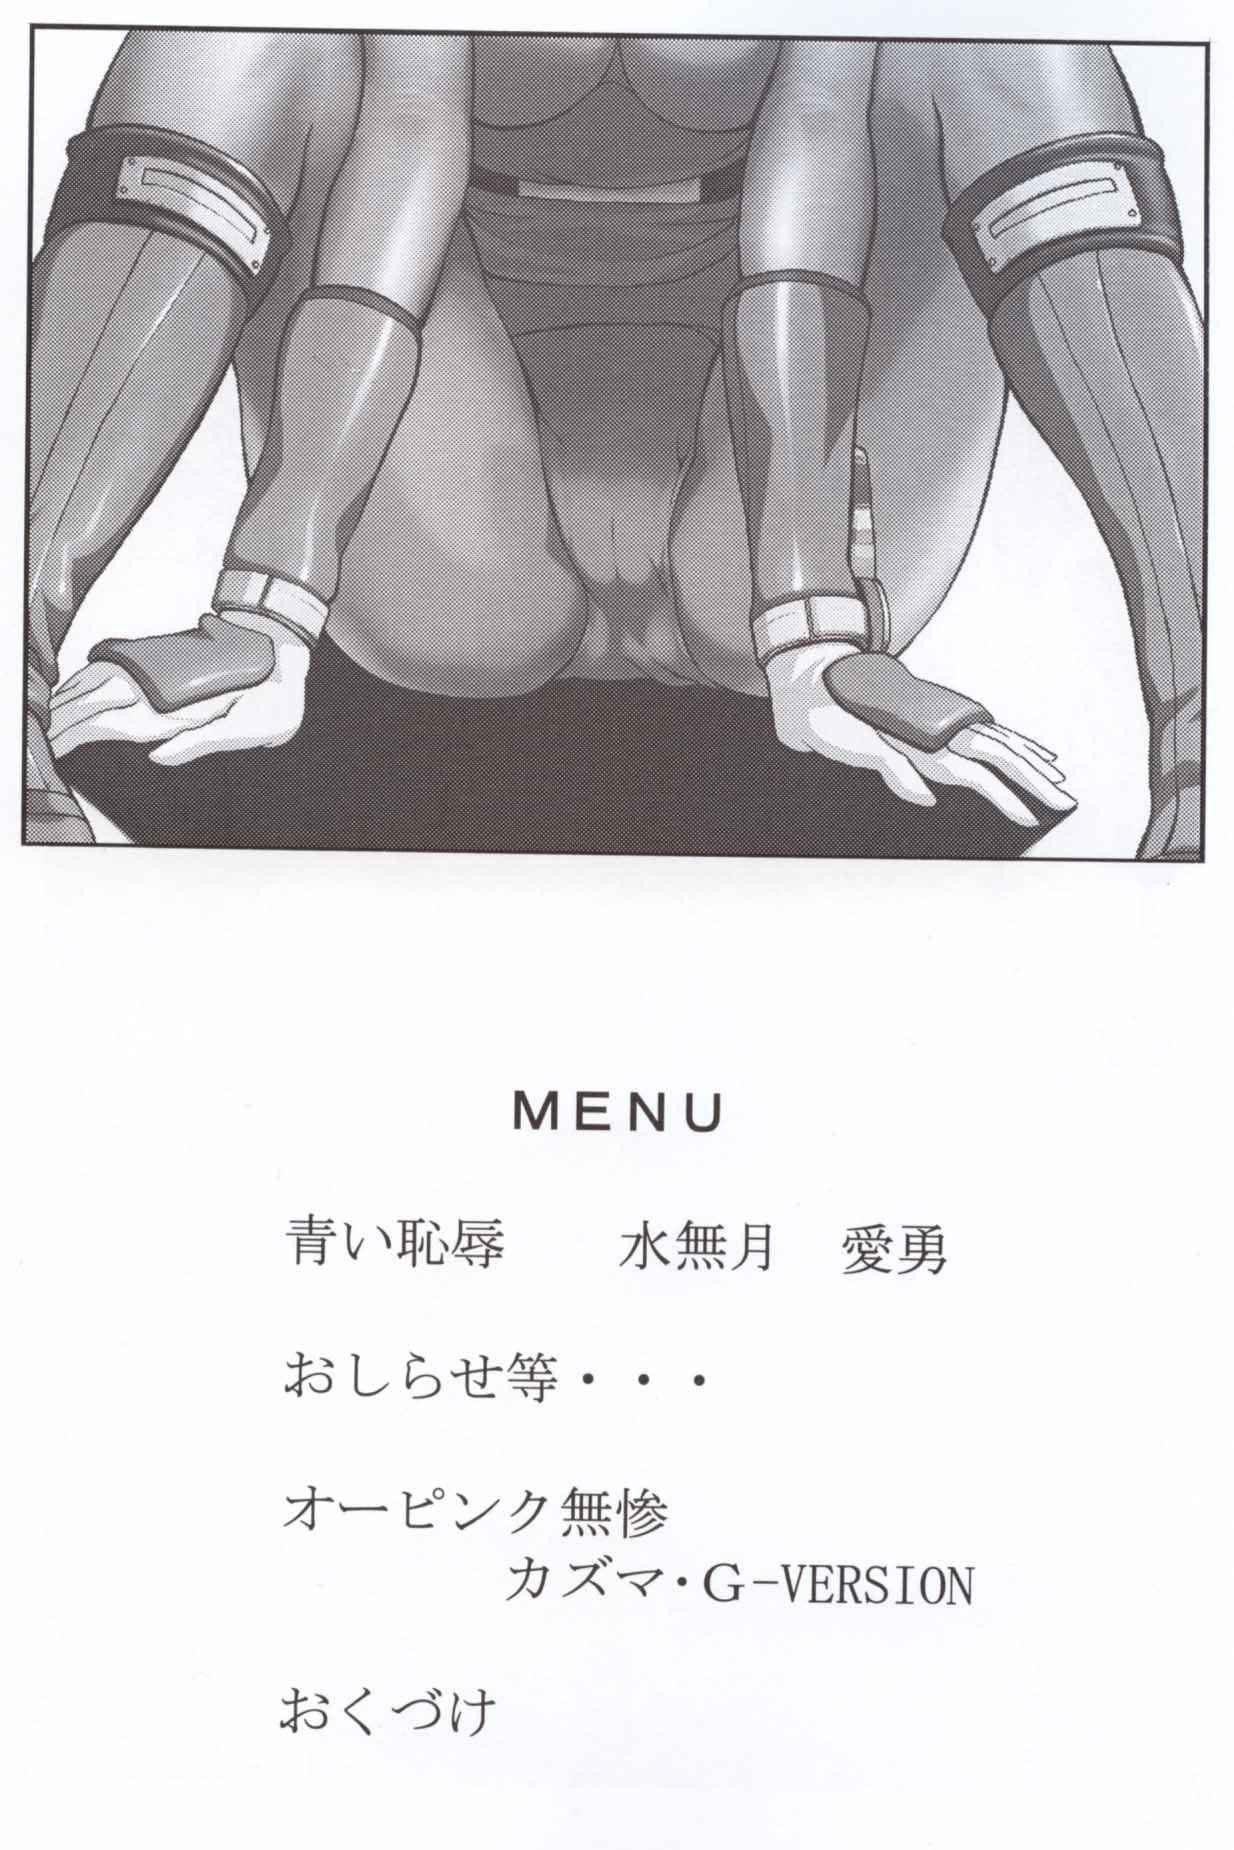 Spreading Bishoujo Senshi Gensou Vol 1 Harikenburou Aoi Chijoku - Power rangers Marido - Page 3